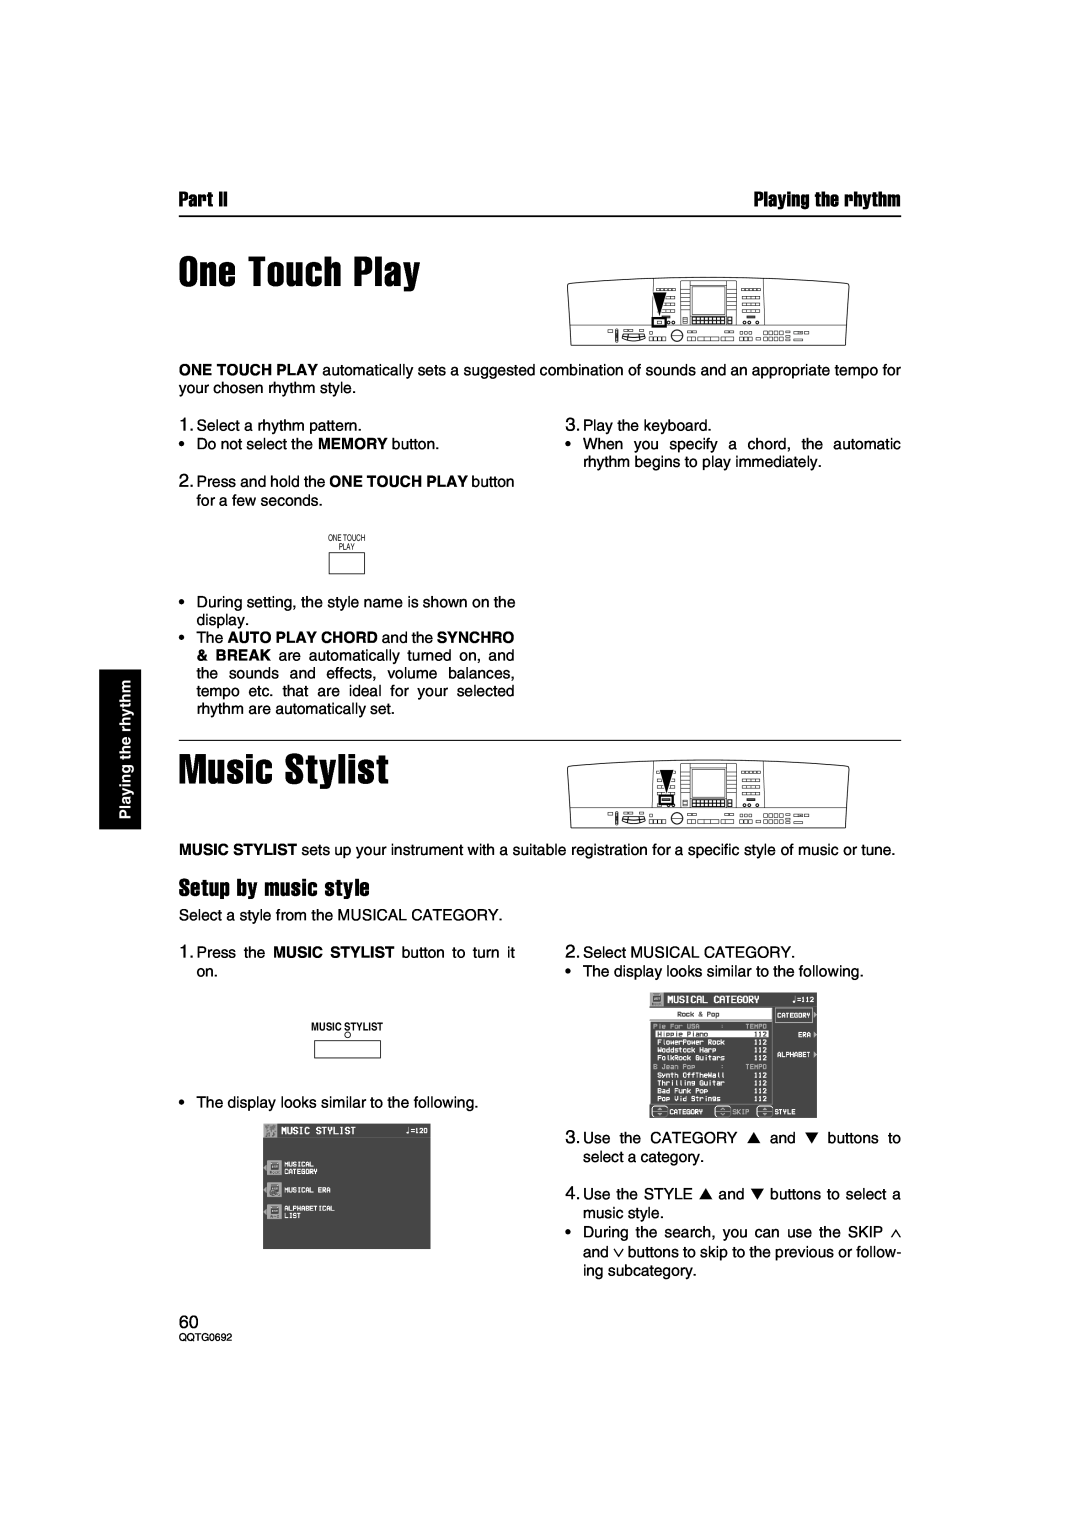 Panasonic SX-KN2600, SX-KN2400 manual One Touch Play, Music Stylist, Setup by music style, Part, Playing the rhythm 